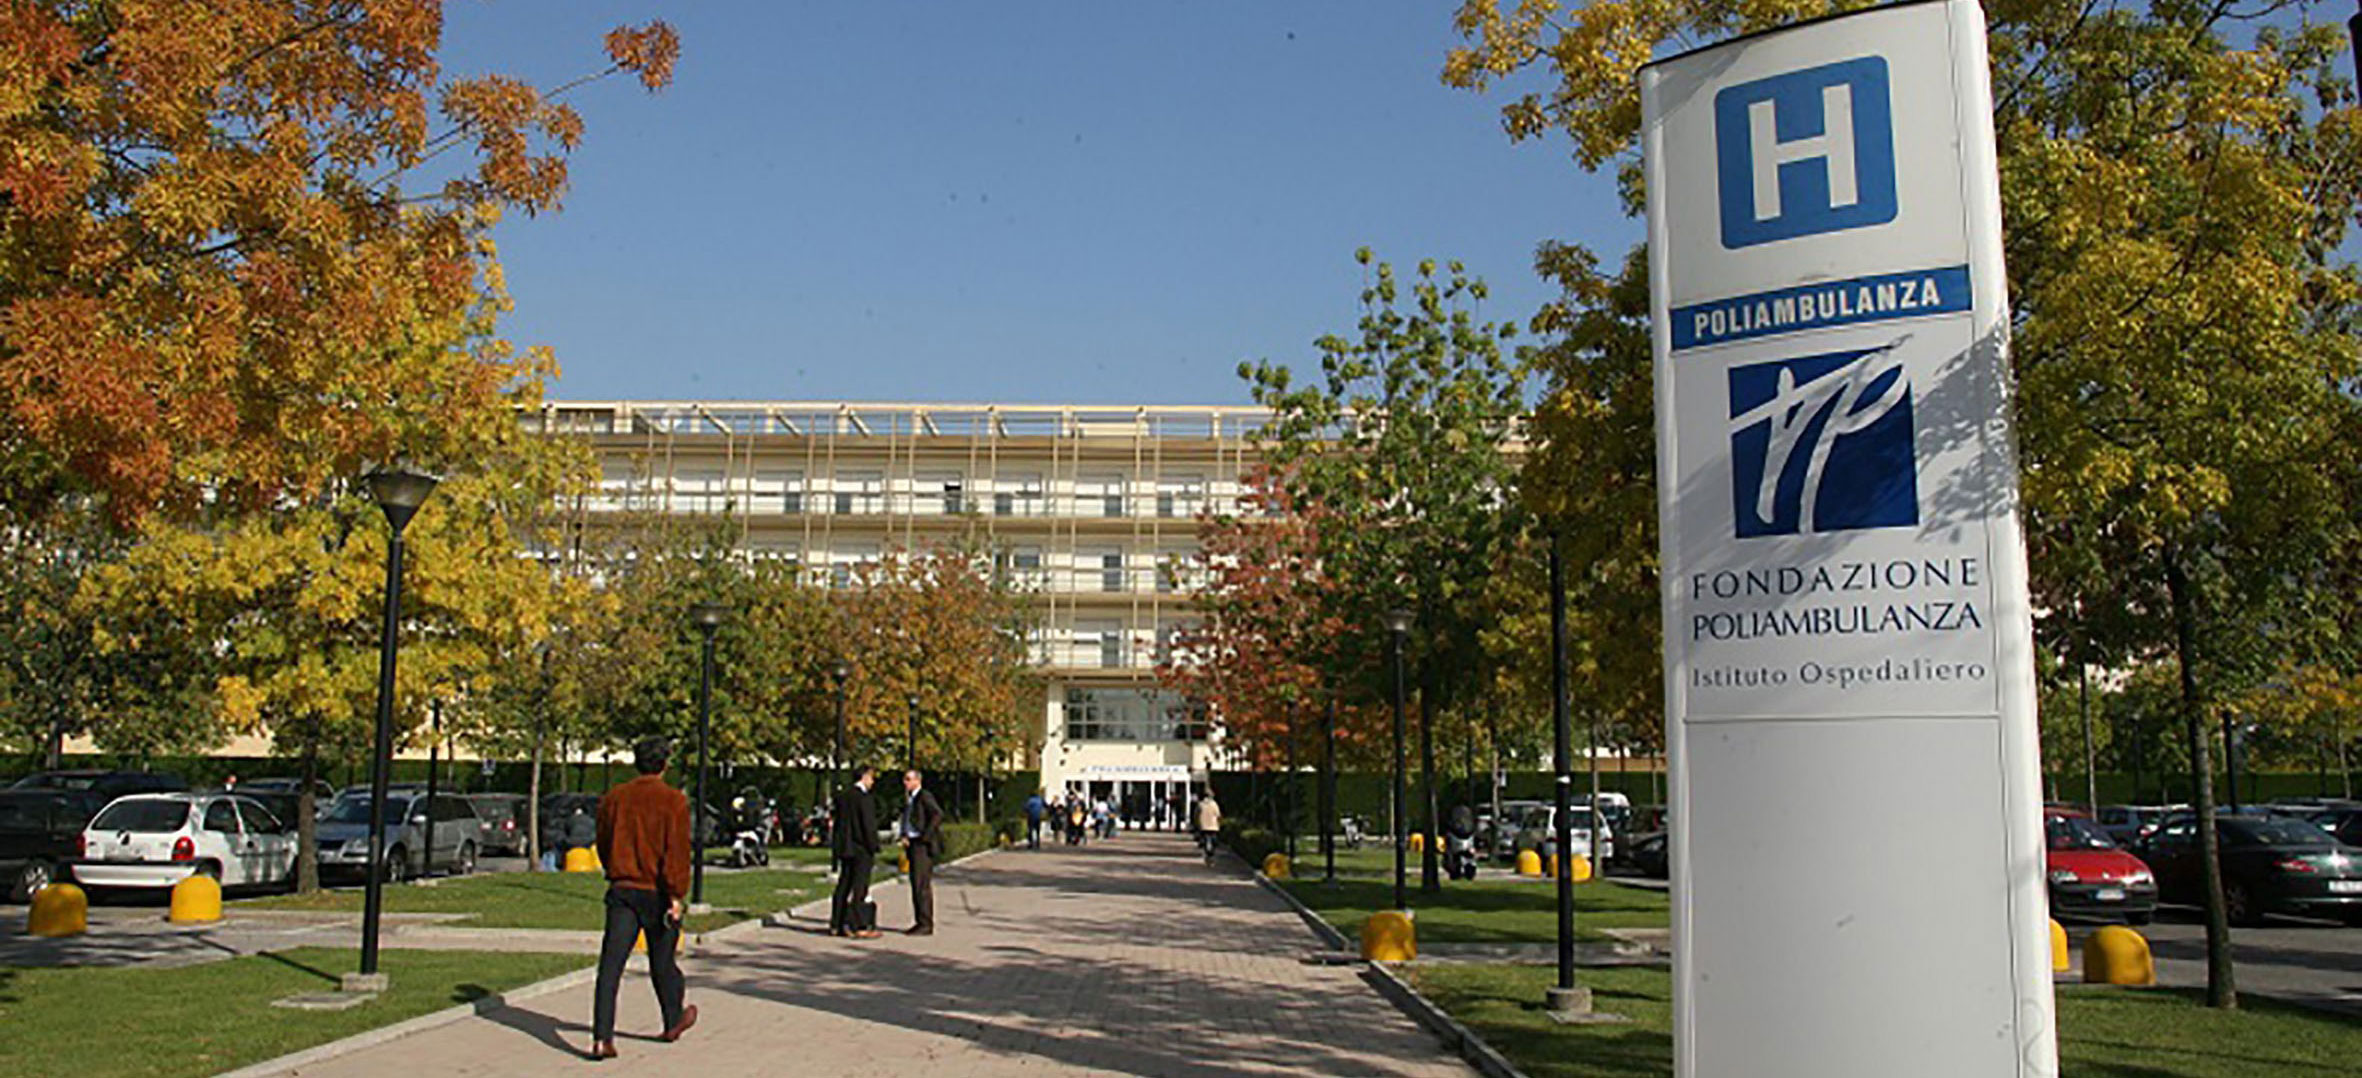 Poliambulanza Foundation Hospital